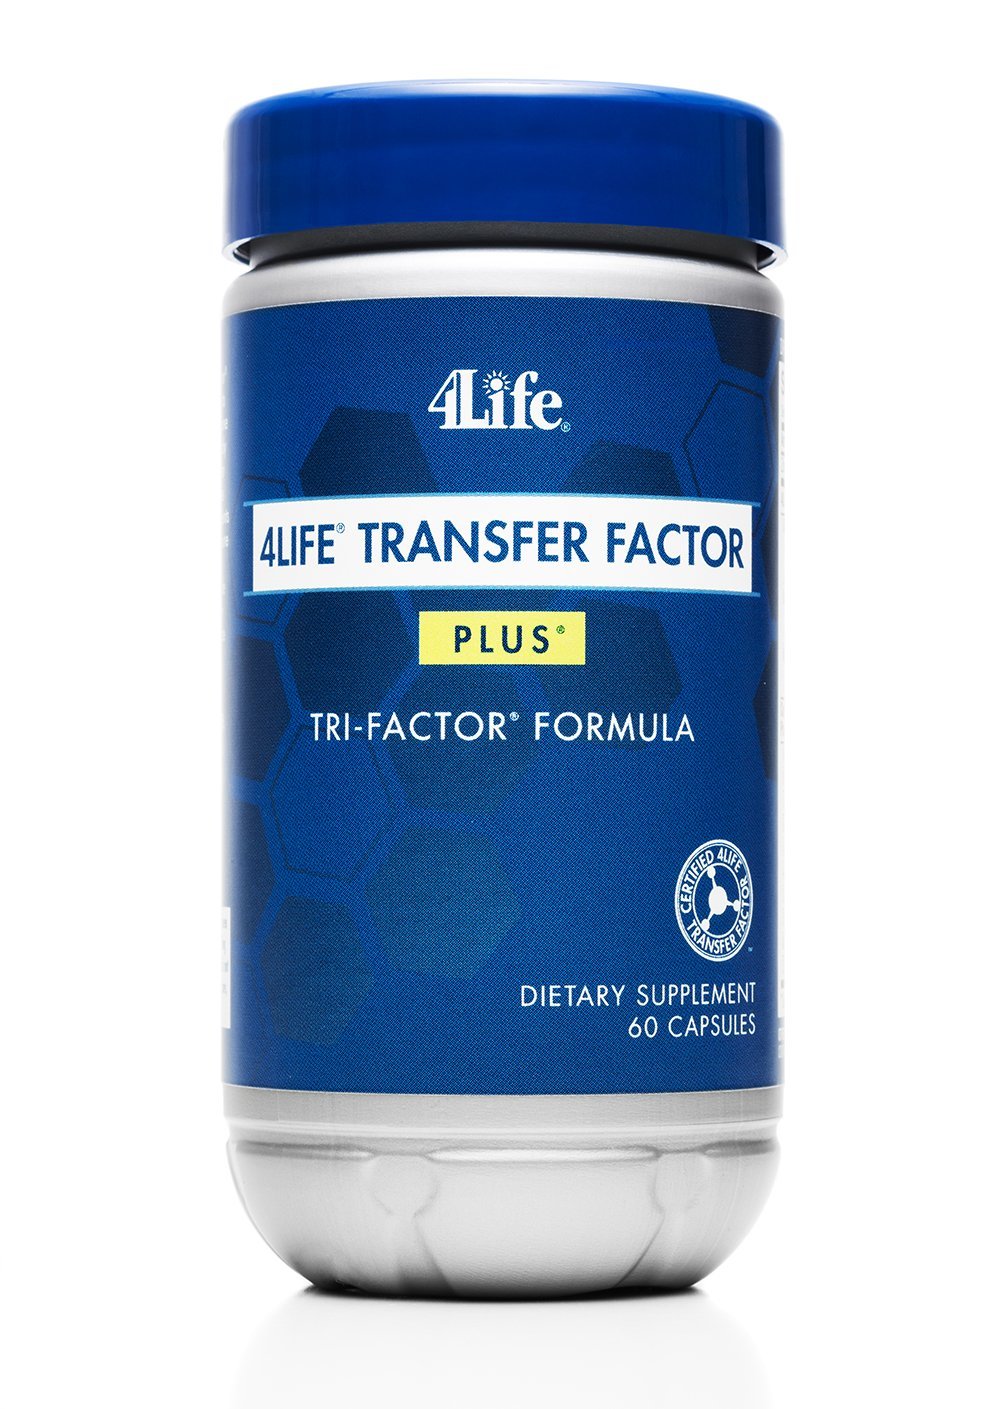 4LifeTransfer Factor Plus Tri-Factor Formula